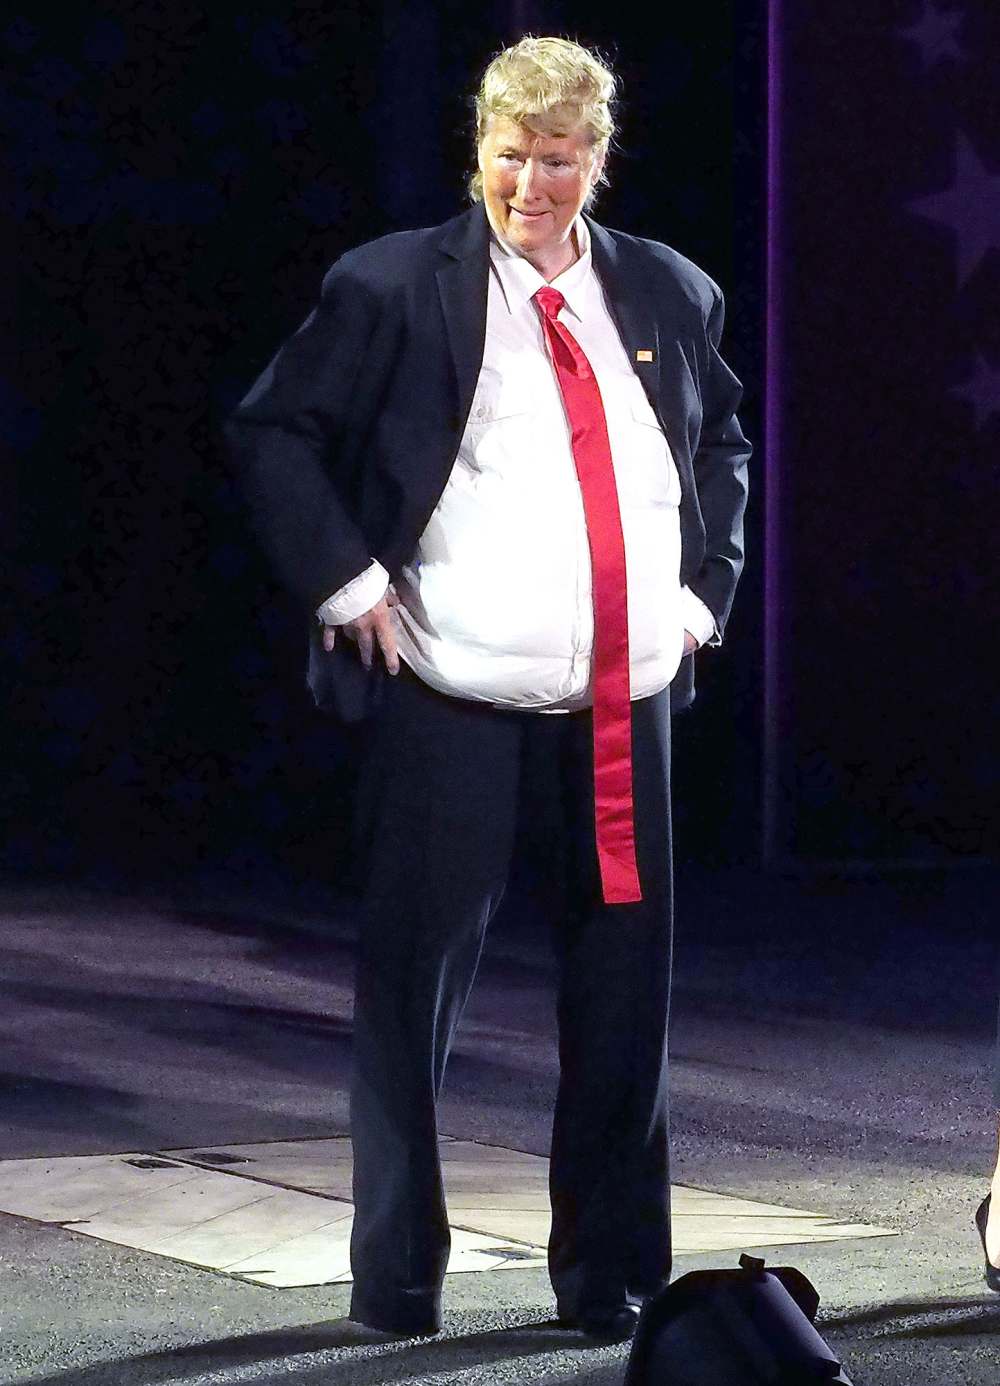 Meryl Streep dressed as Donald Trump